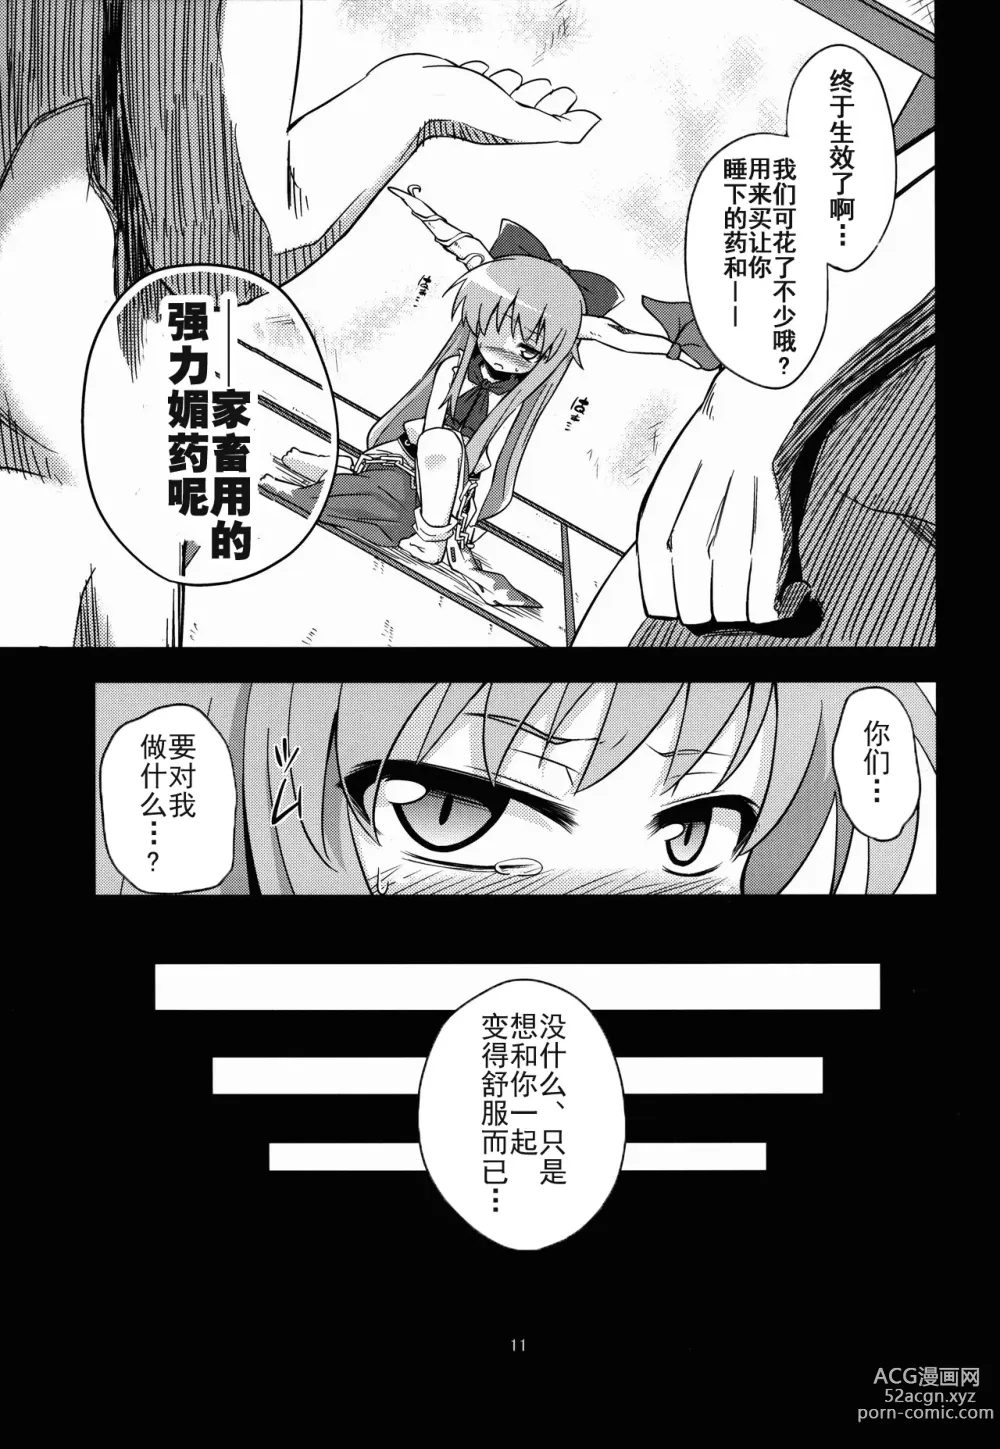 Page 11 of doujinshi Oni Hankyo Hanki